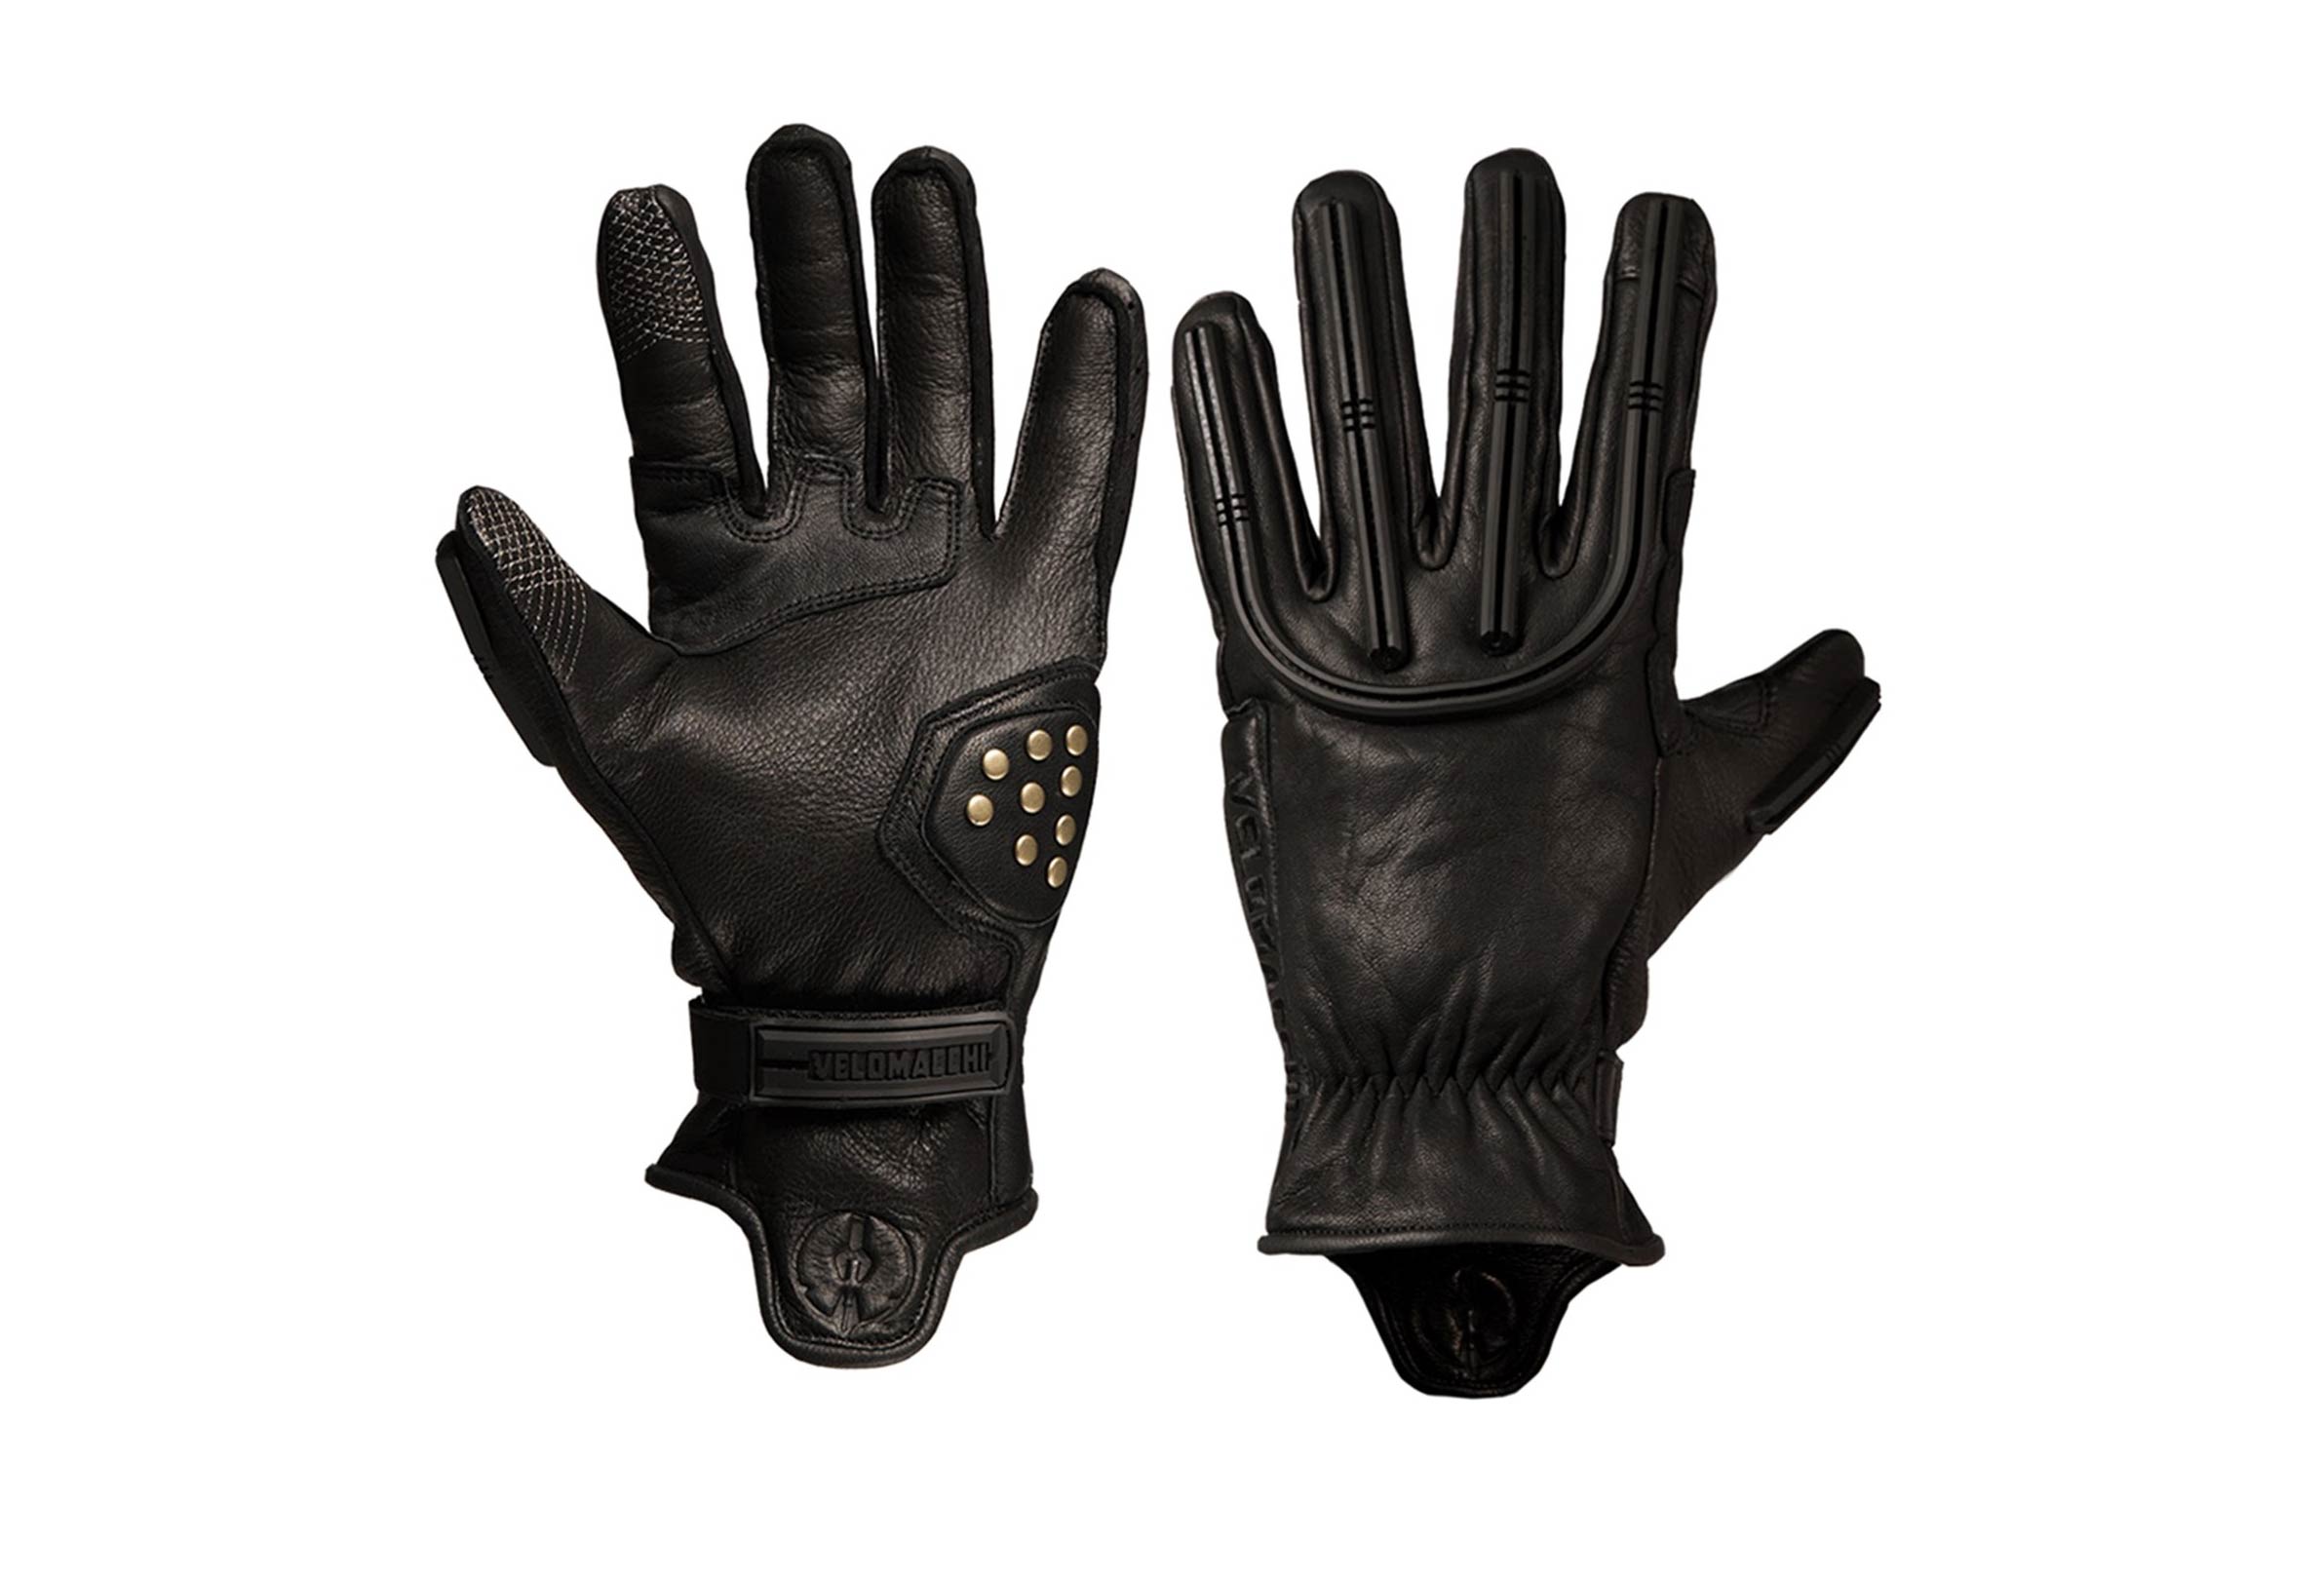 Velomacchi Speedway Motorcycle Gloves